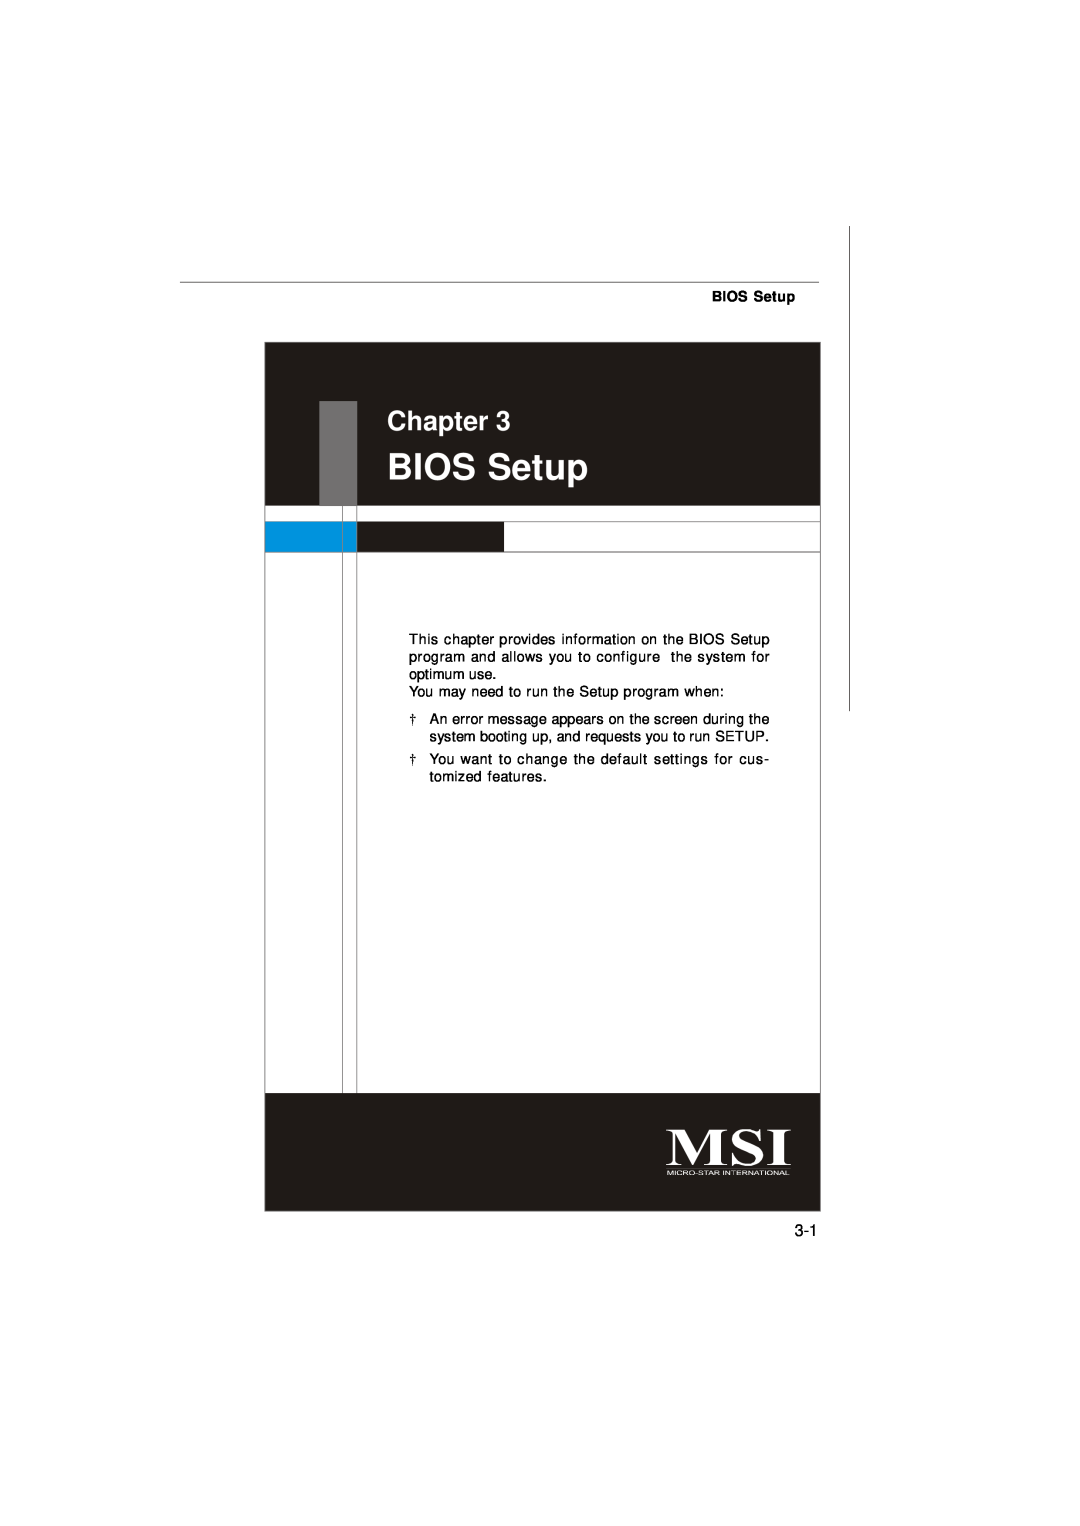 Micro Star  Computer G31M manual BIOS Setup, Chapter 